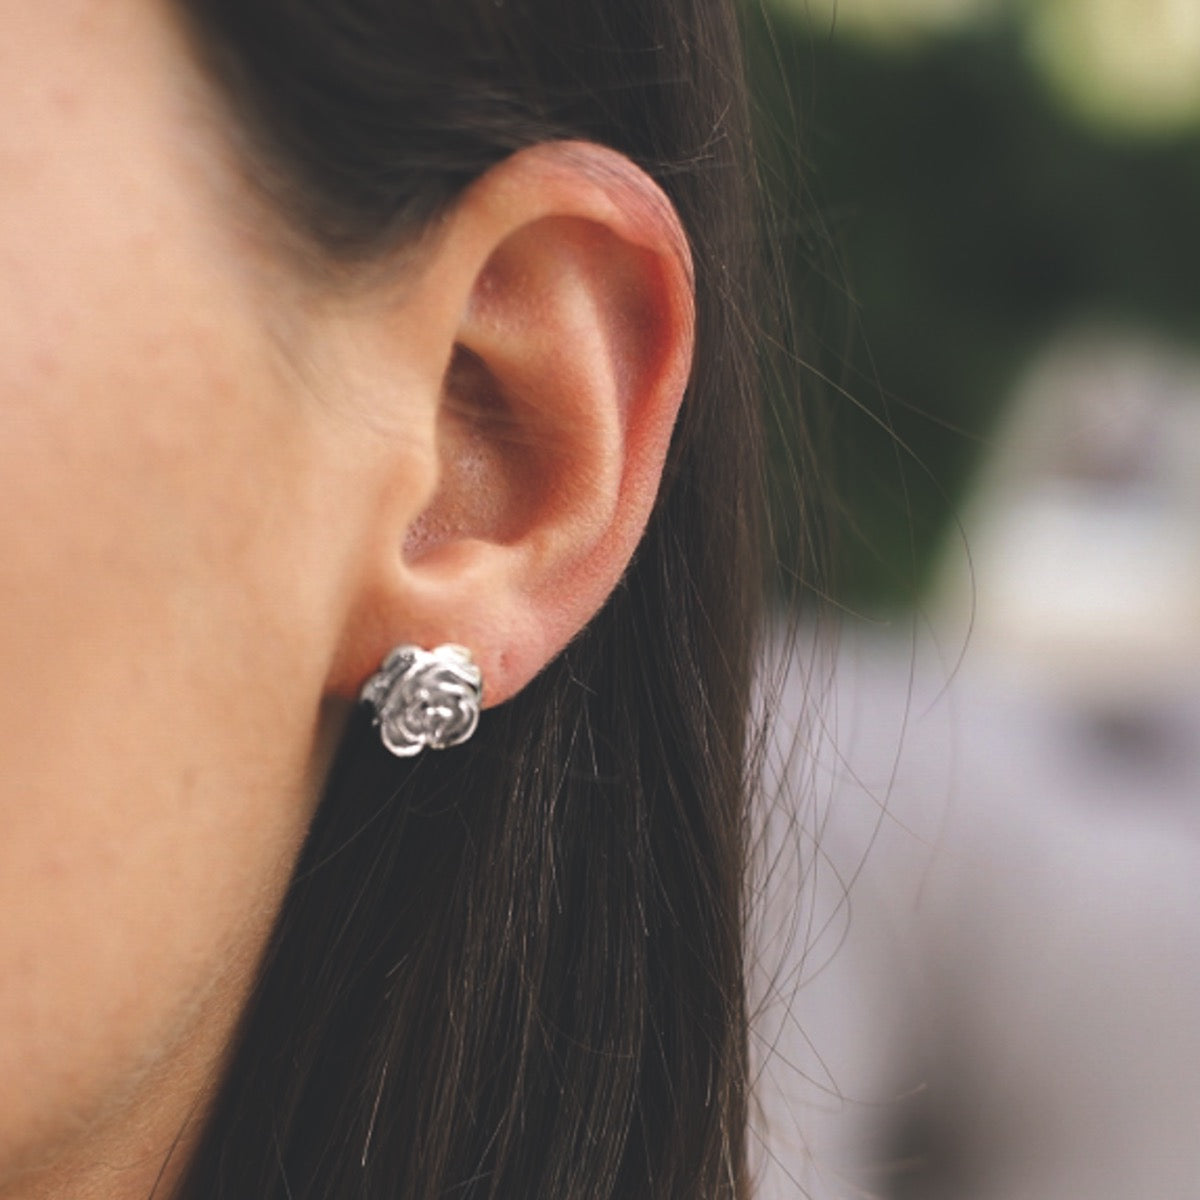 Silver rose stud earrings